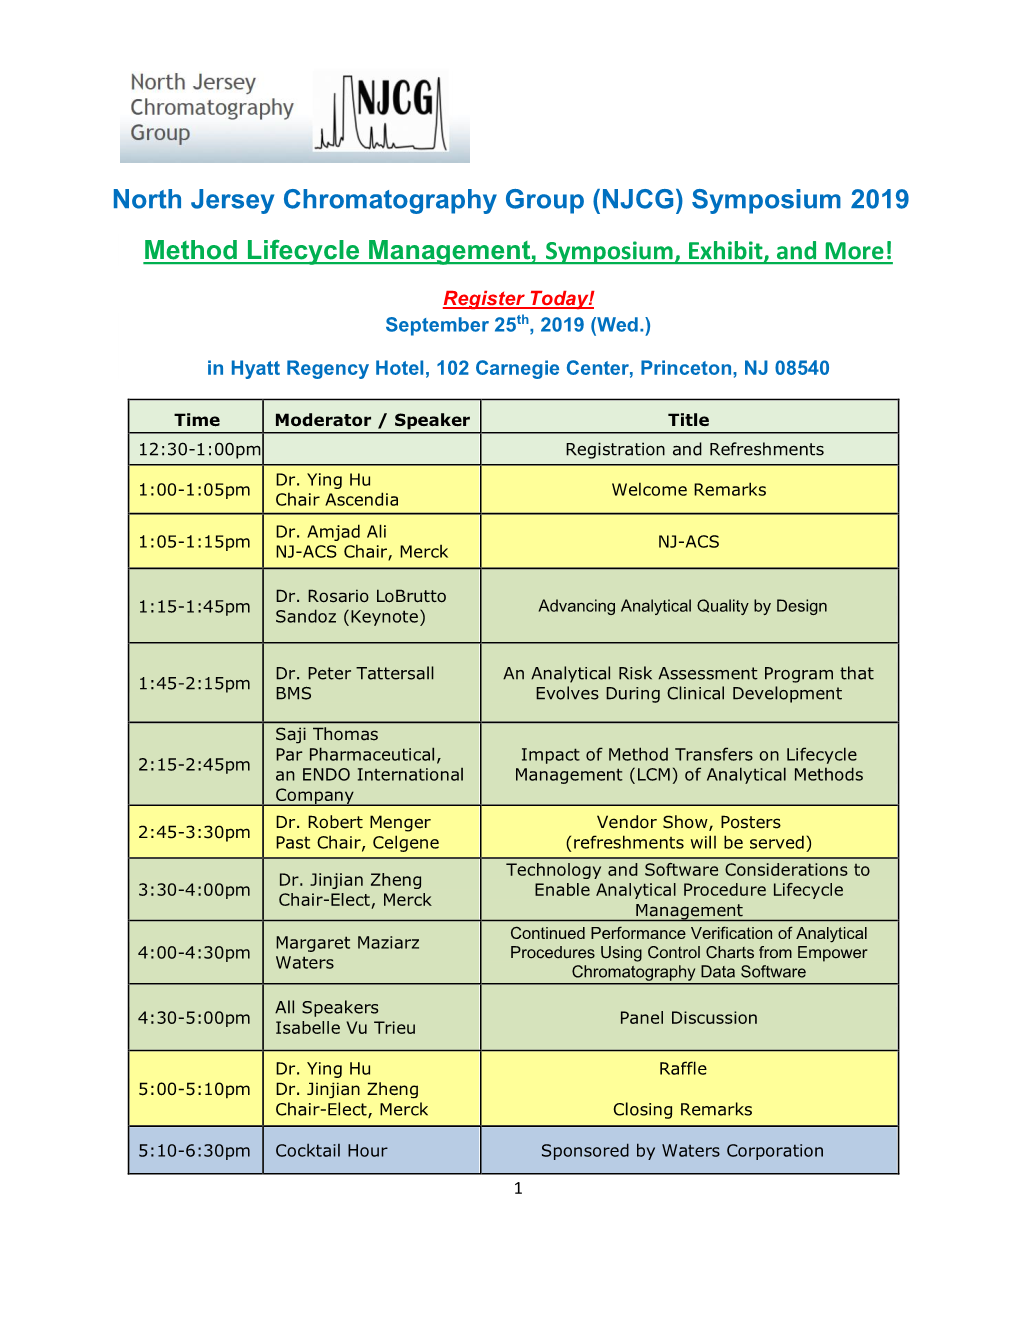 NJCG) Symposium 2019 Method Lifecycle Management, Symposium, Exhibit, and More!